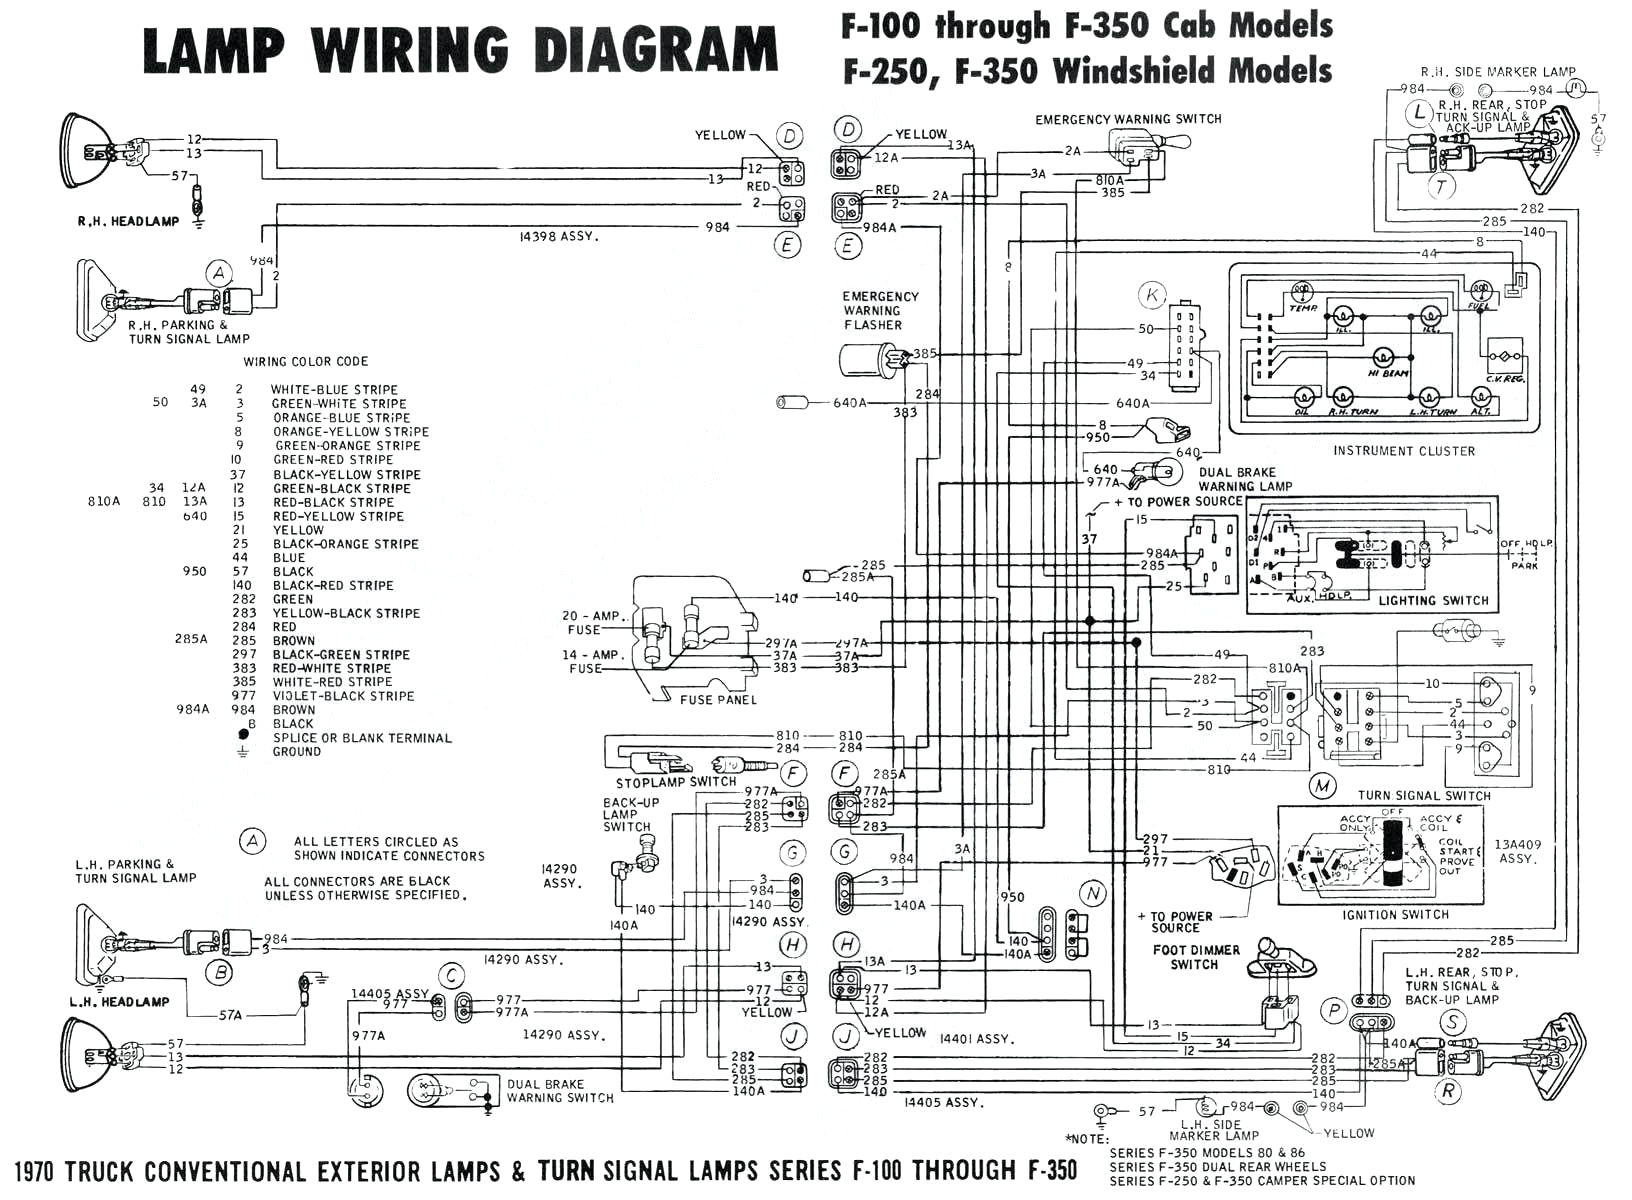 chicago electric winch wiring diagram beautiful winch wiring diagram two solenoid unique chicago electric winch jpg